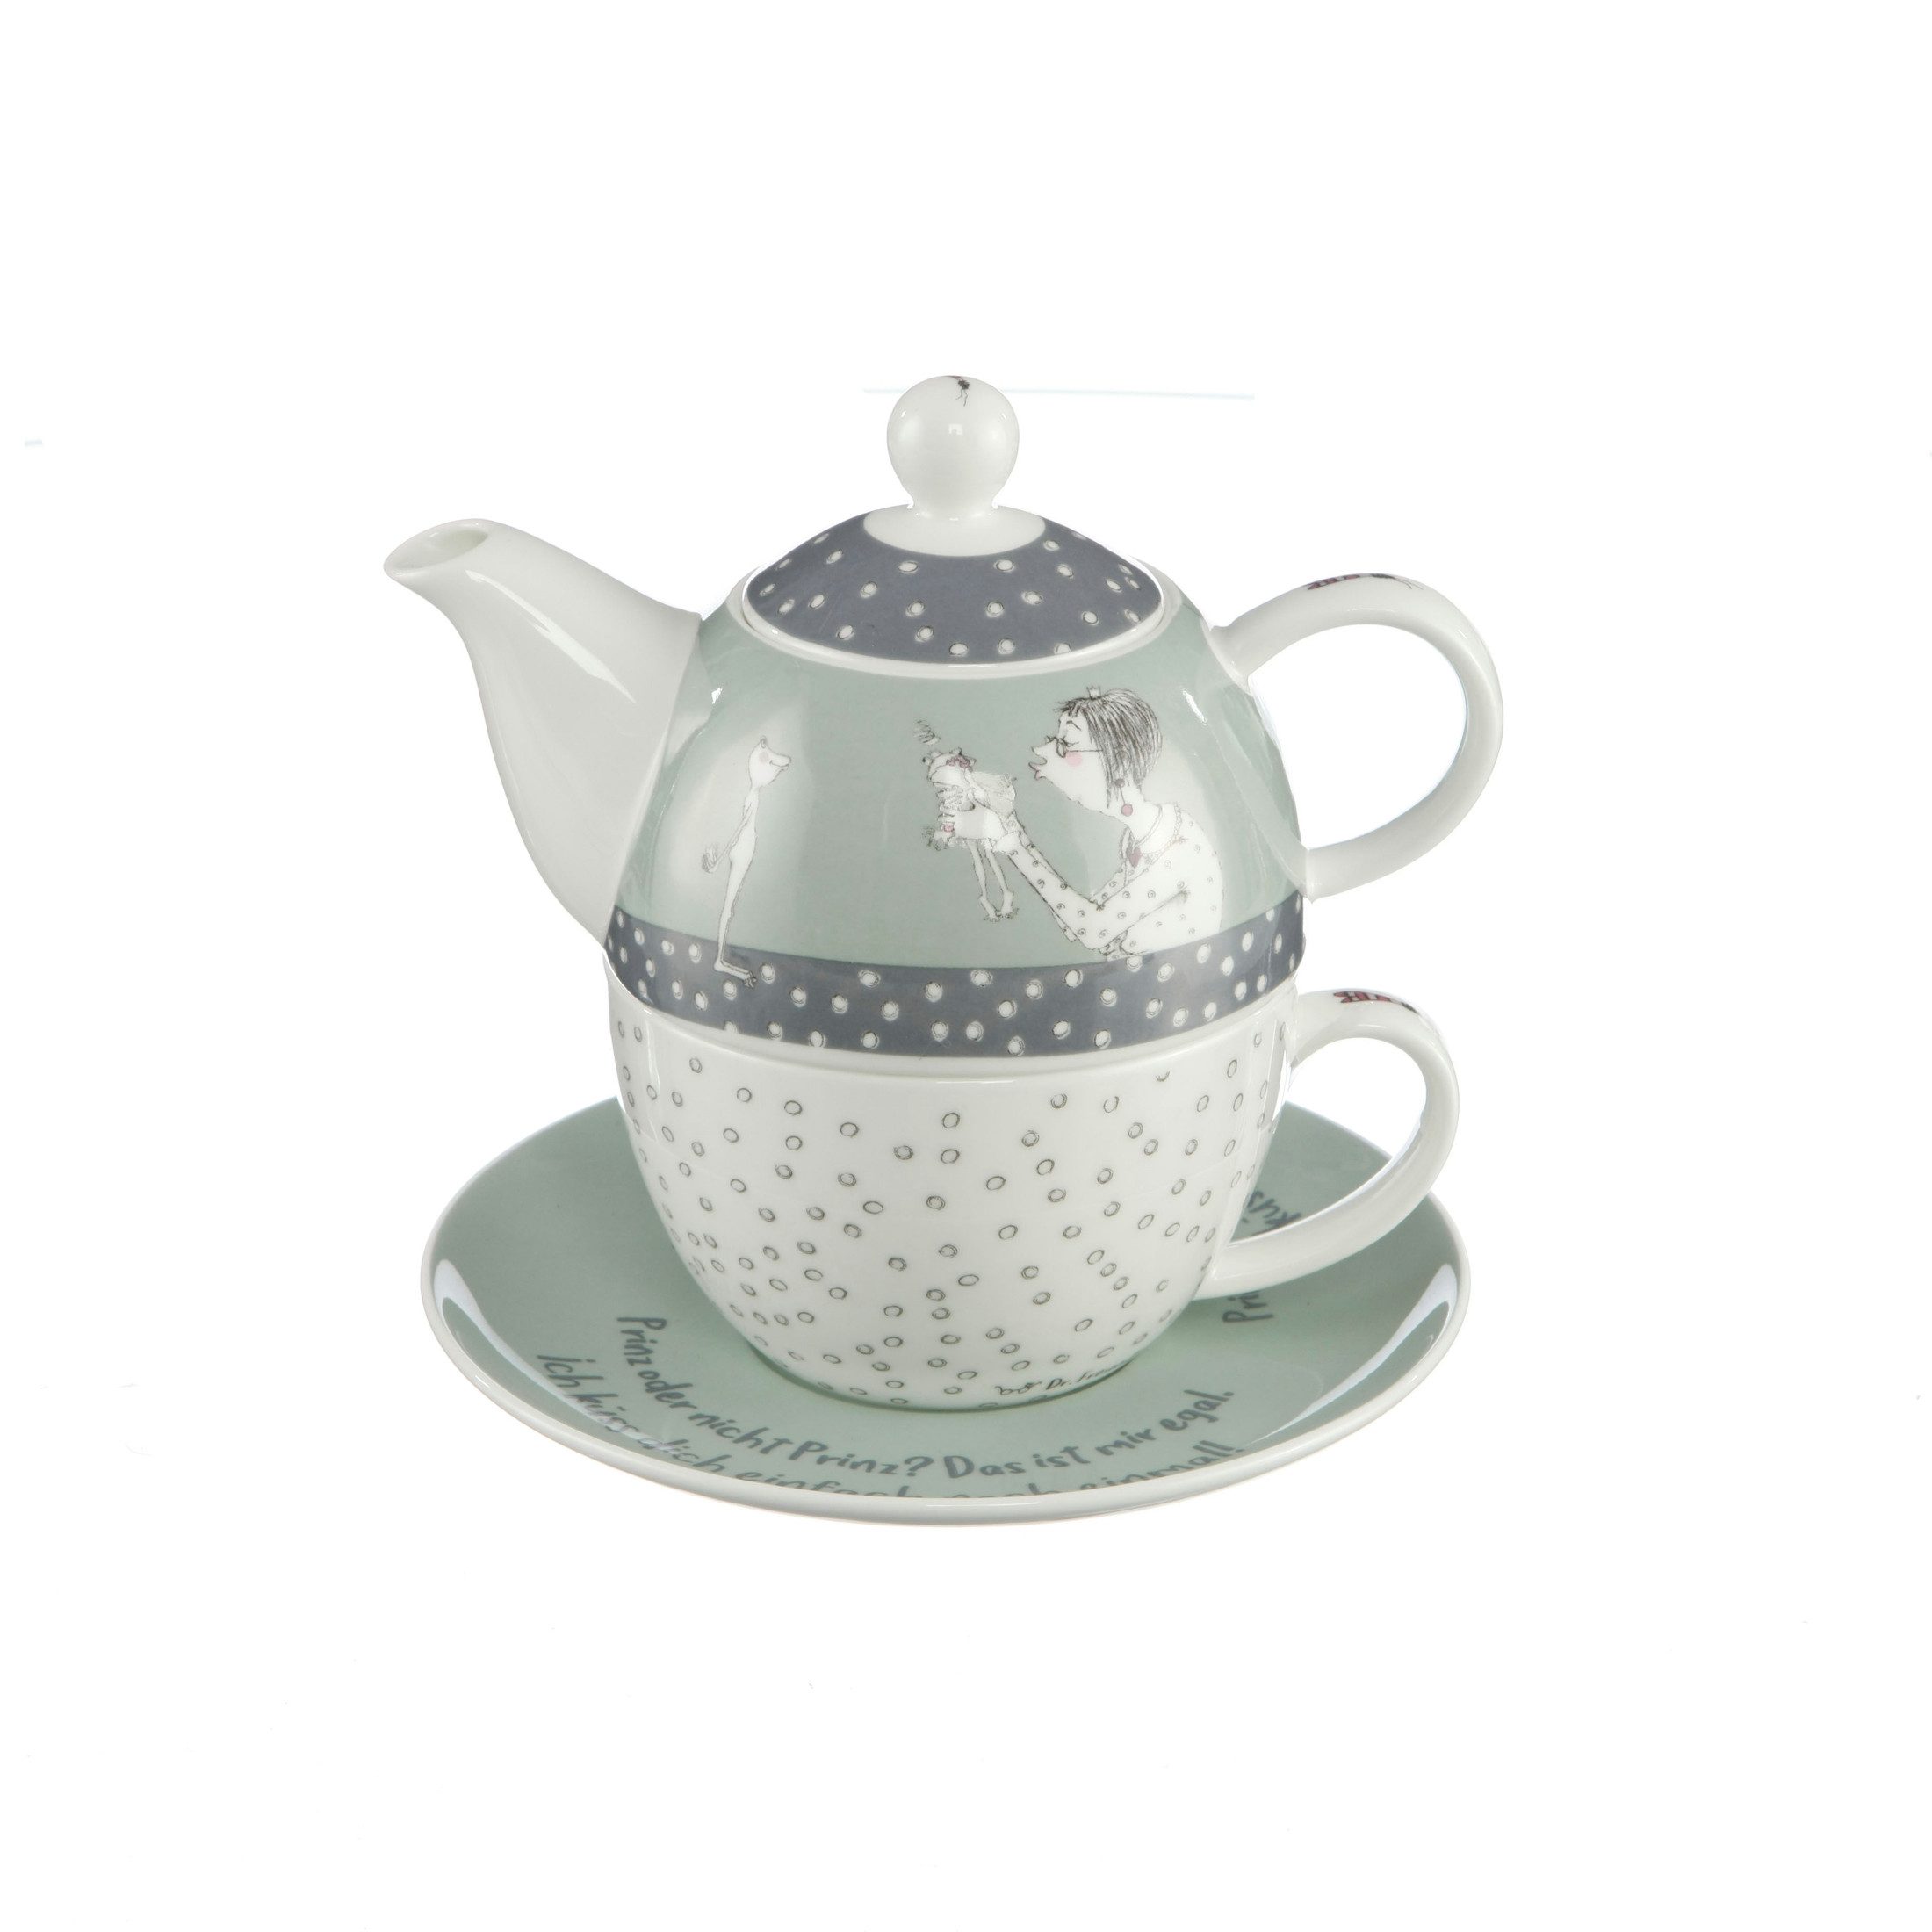 Goebel Teekanne Tea for One Freundlieb - Prinz oder nicht, Porzellan Teetasse